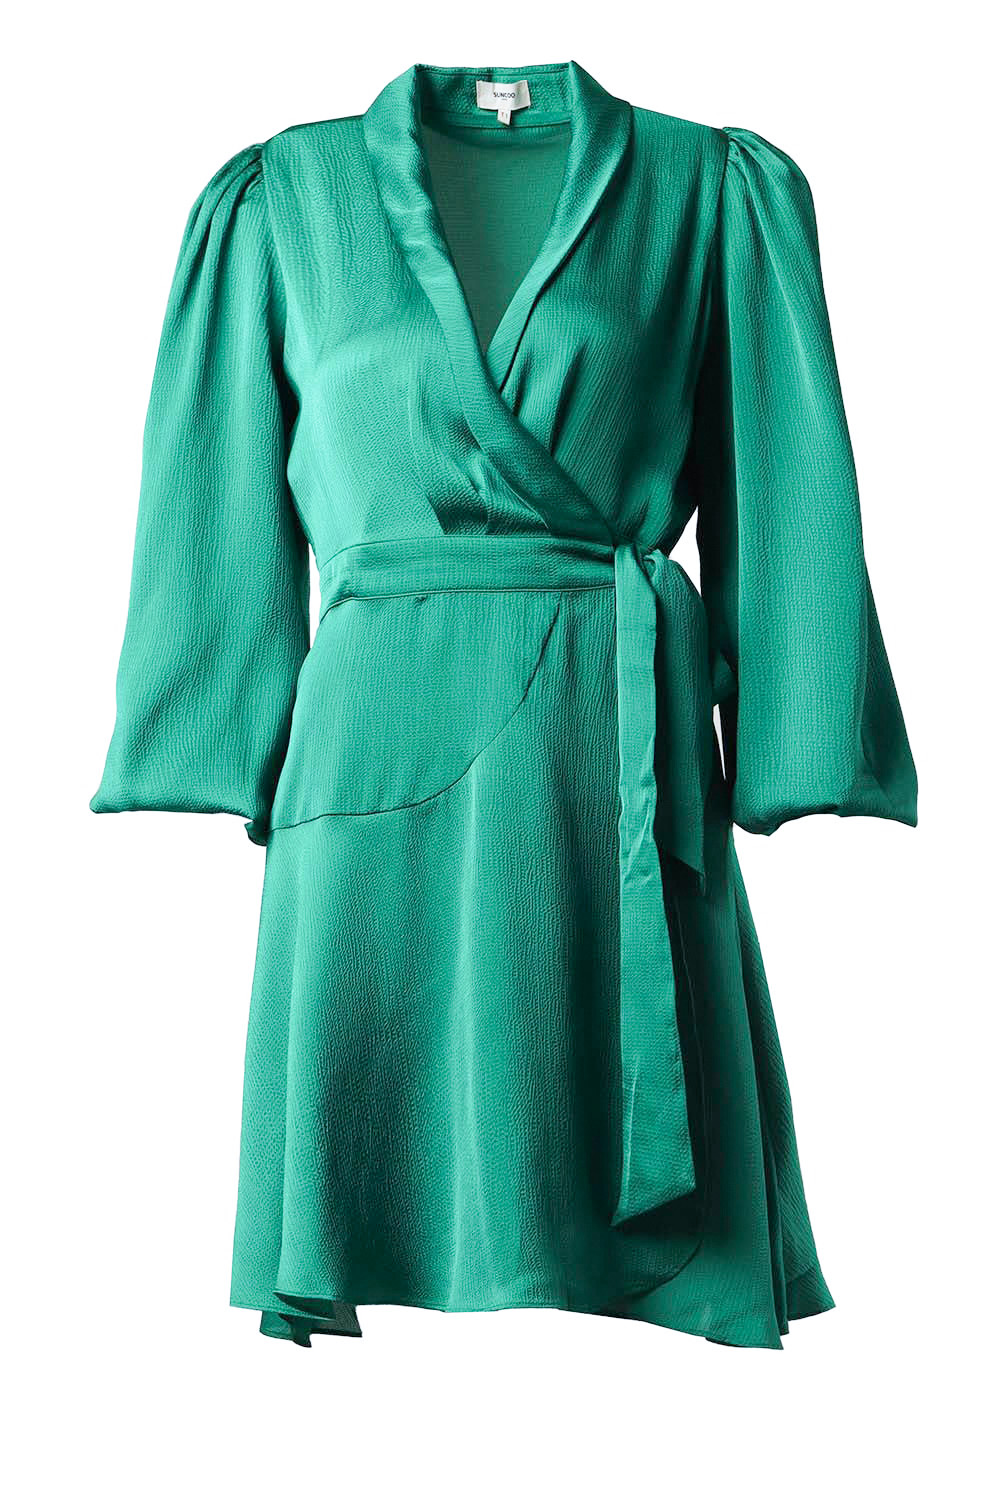 Suncoo Satijnen overslag jurk Clun groen